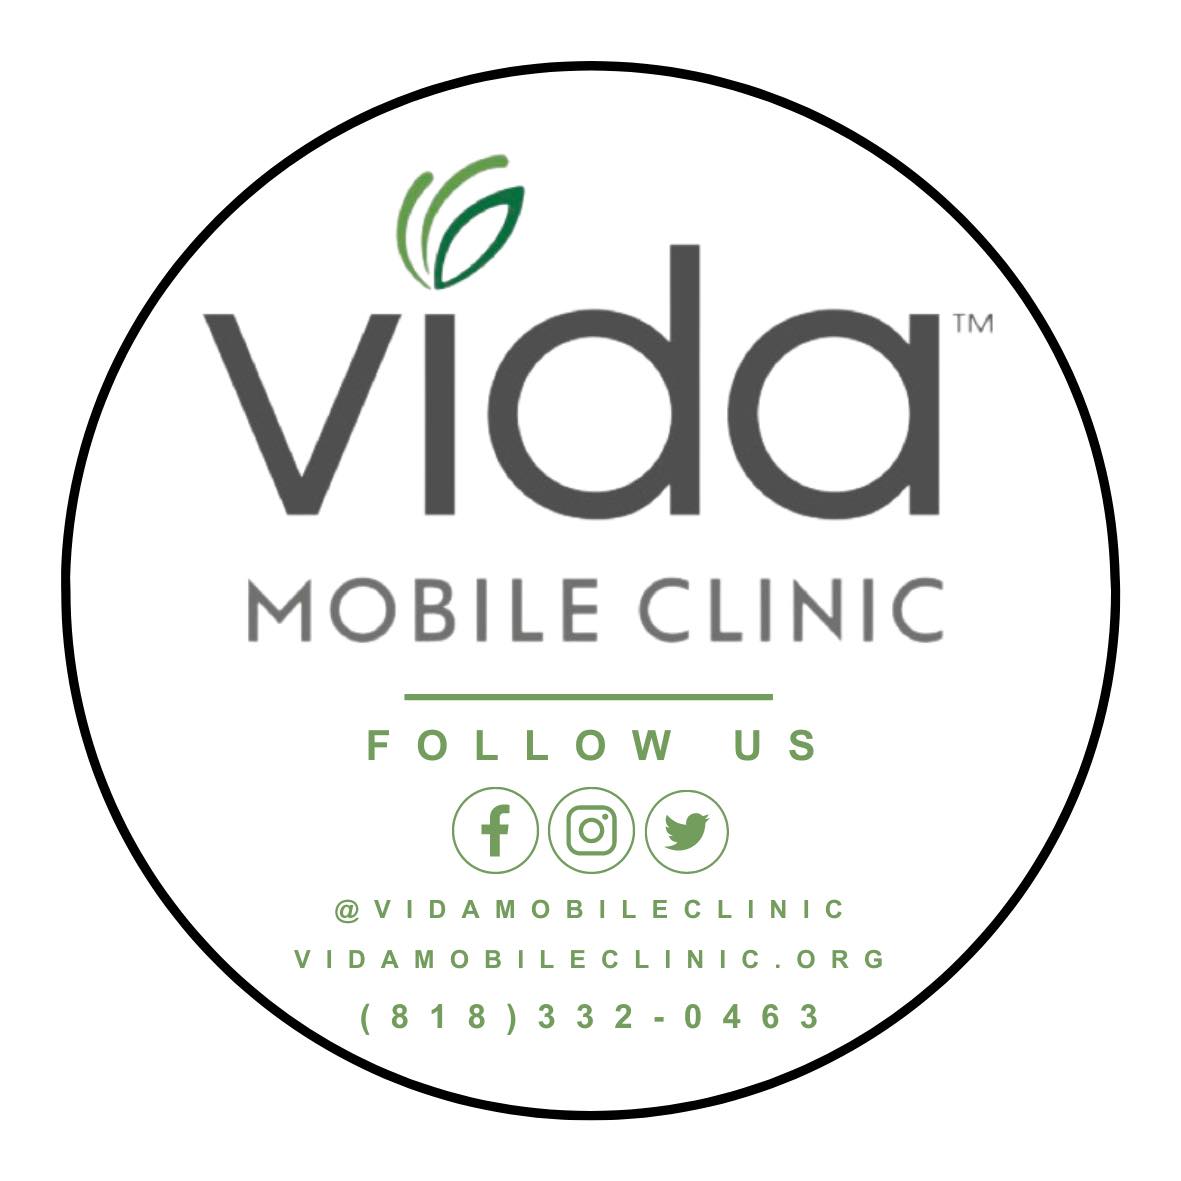 Vida Mobile Clinic